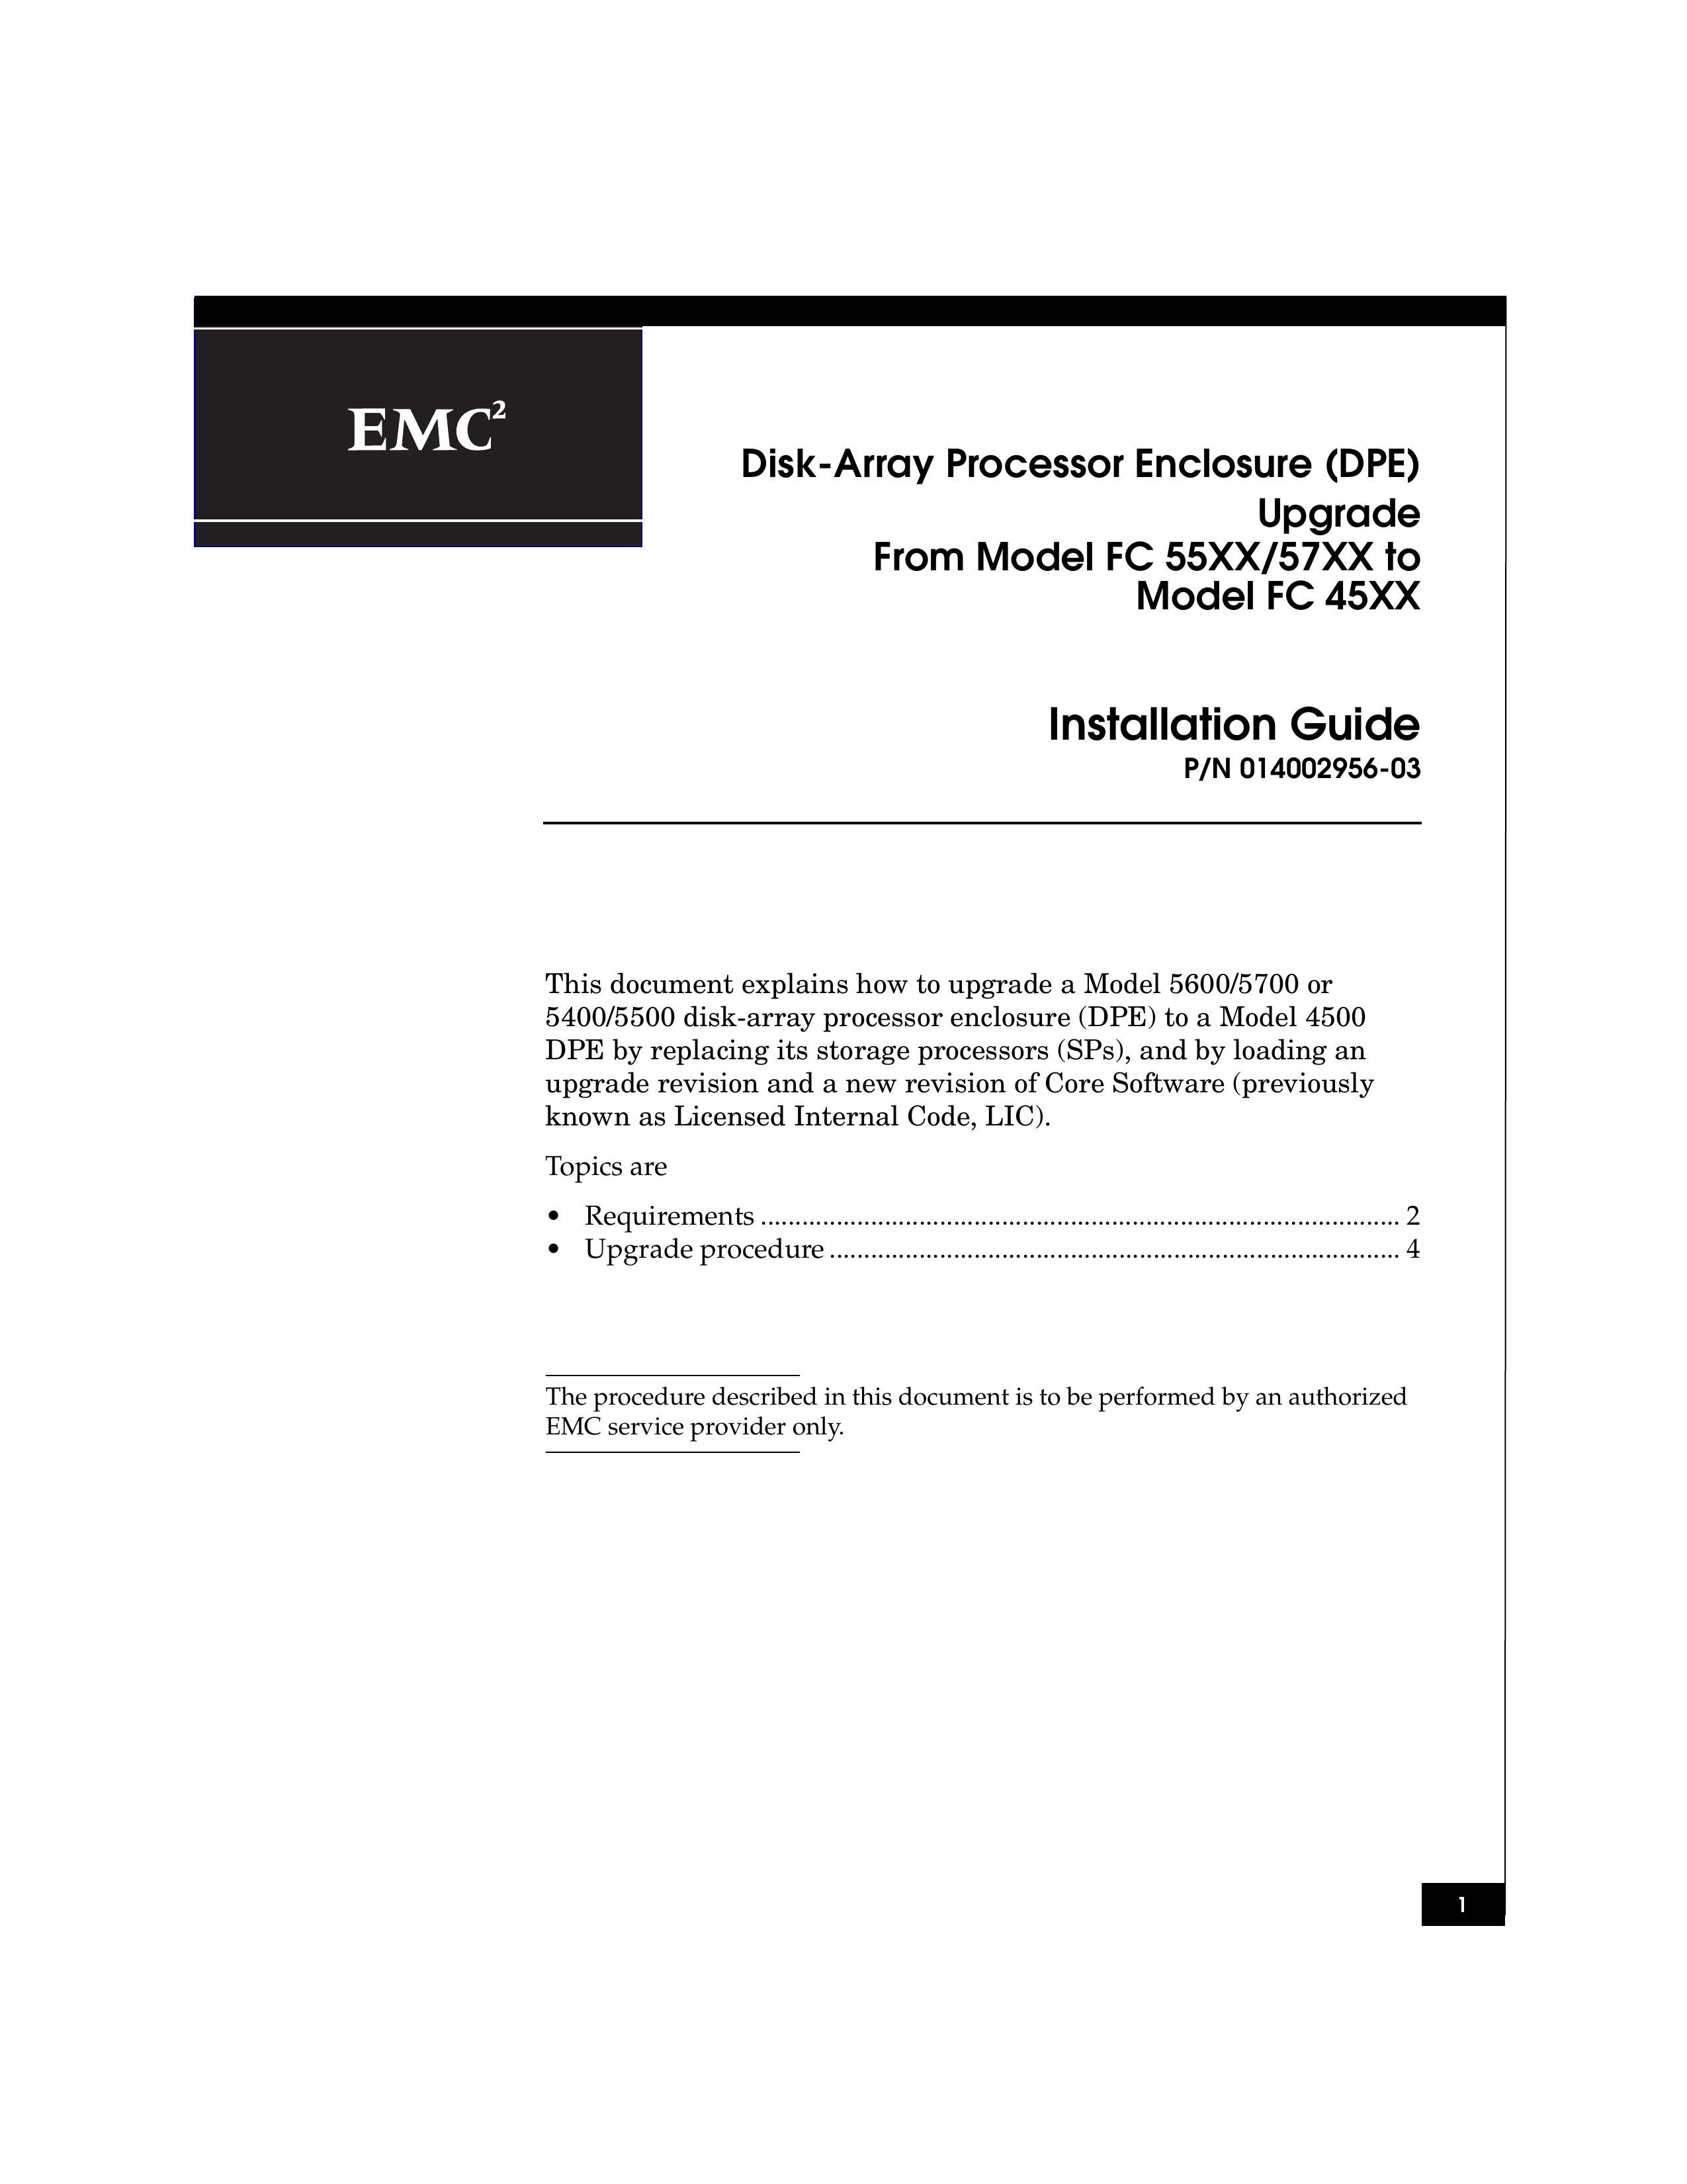 EMC FC 45XX Outboard Motor User Manual